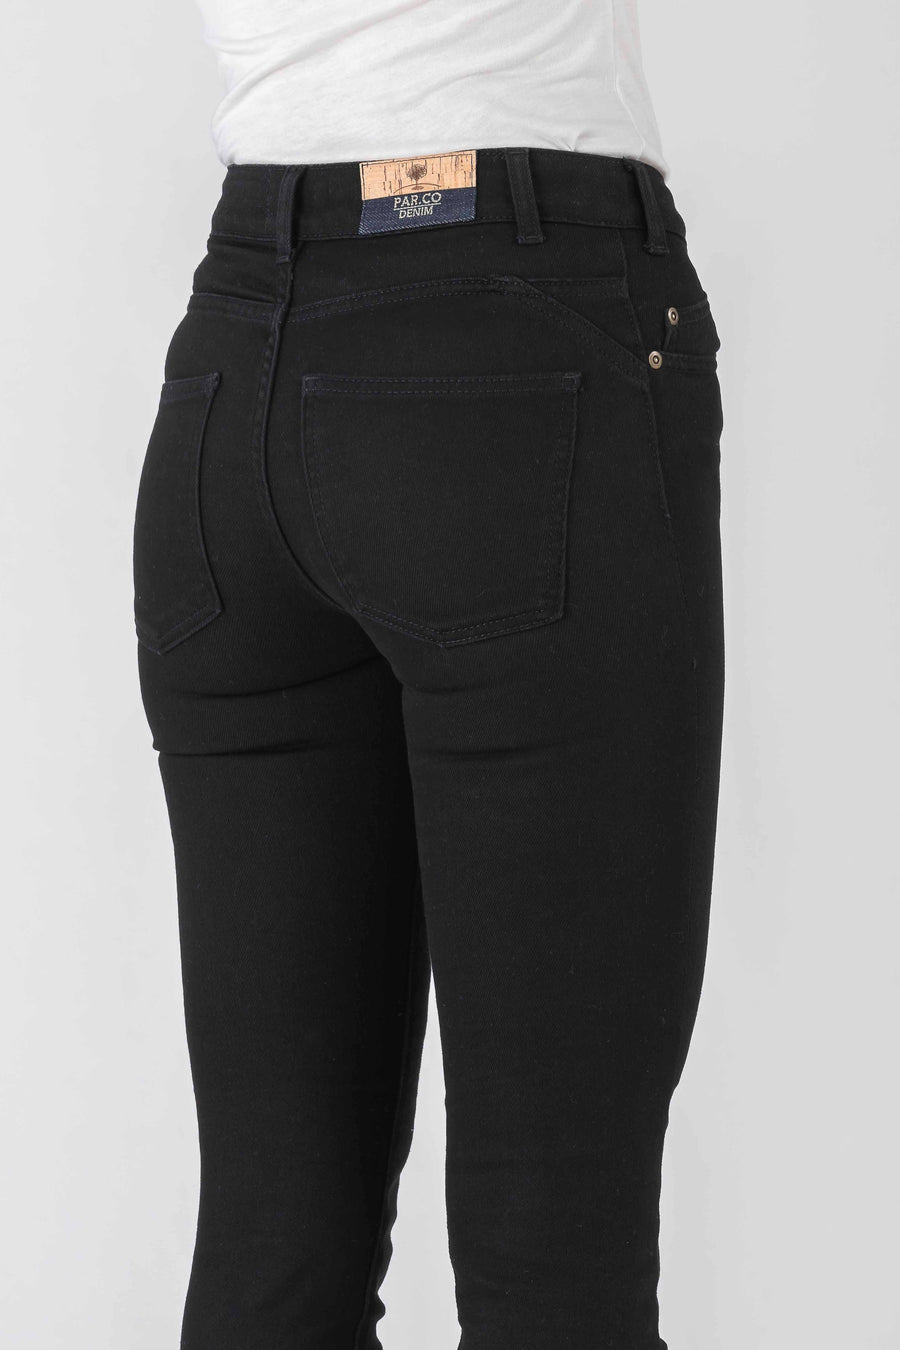 Par.co DENIM Woman Jeans Holly Black Slim Jeans βιώσιμη μόδα ηθική μόδα